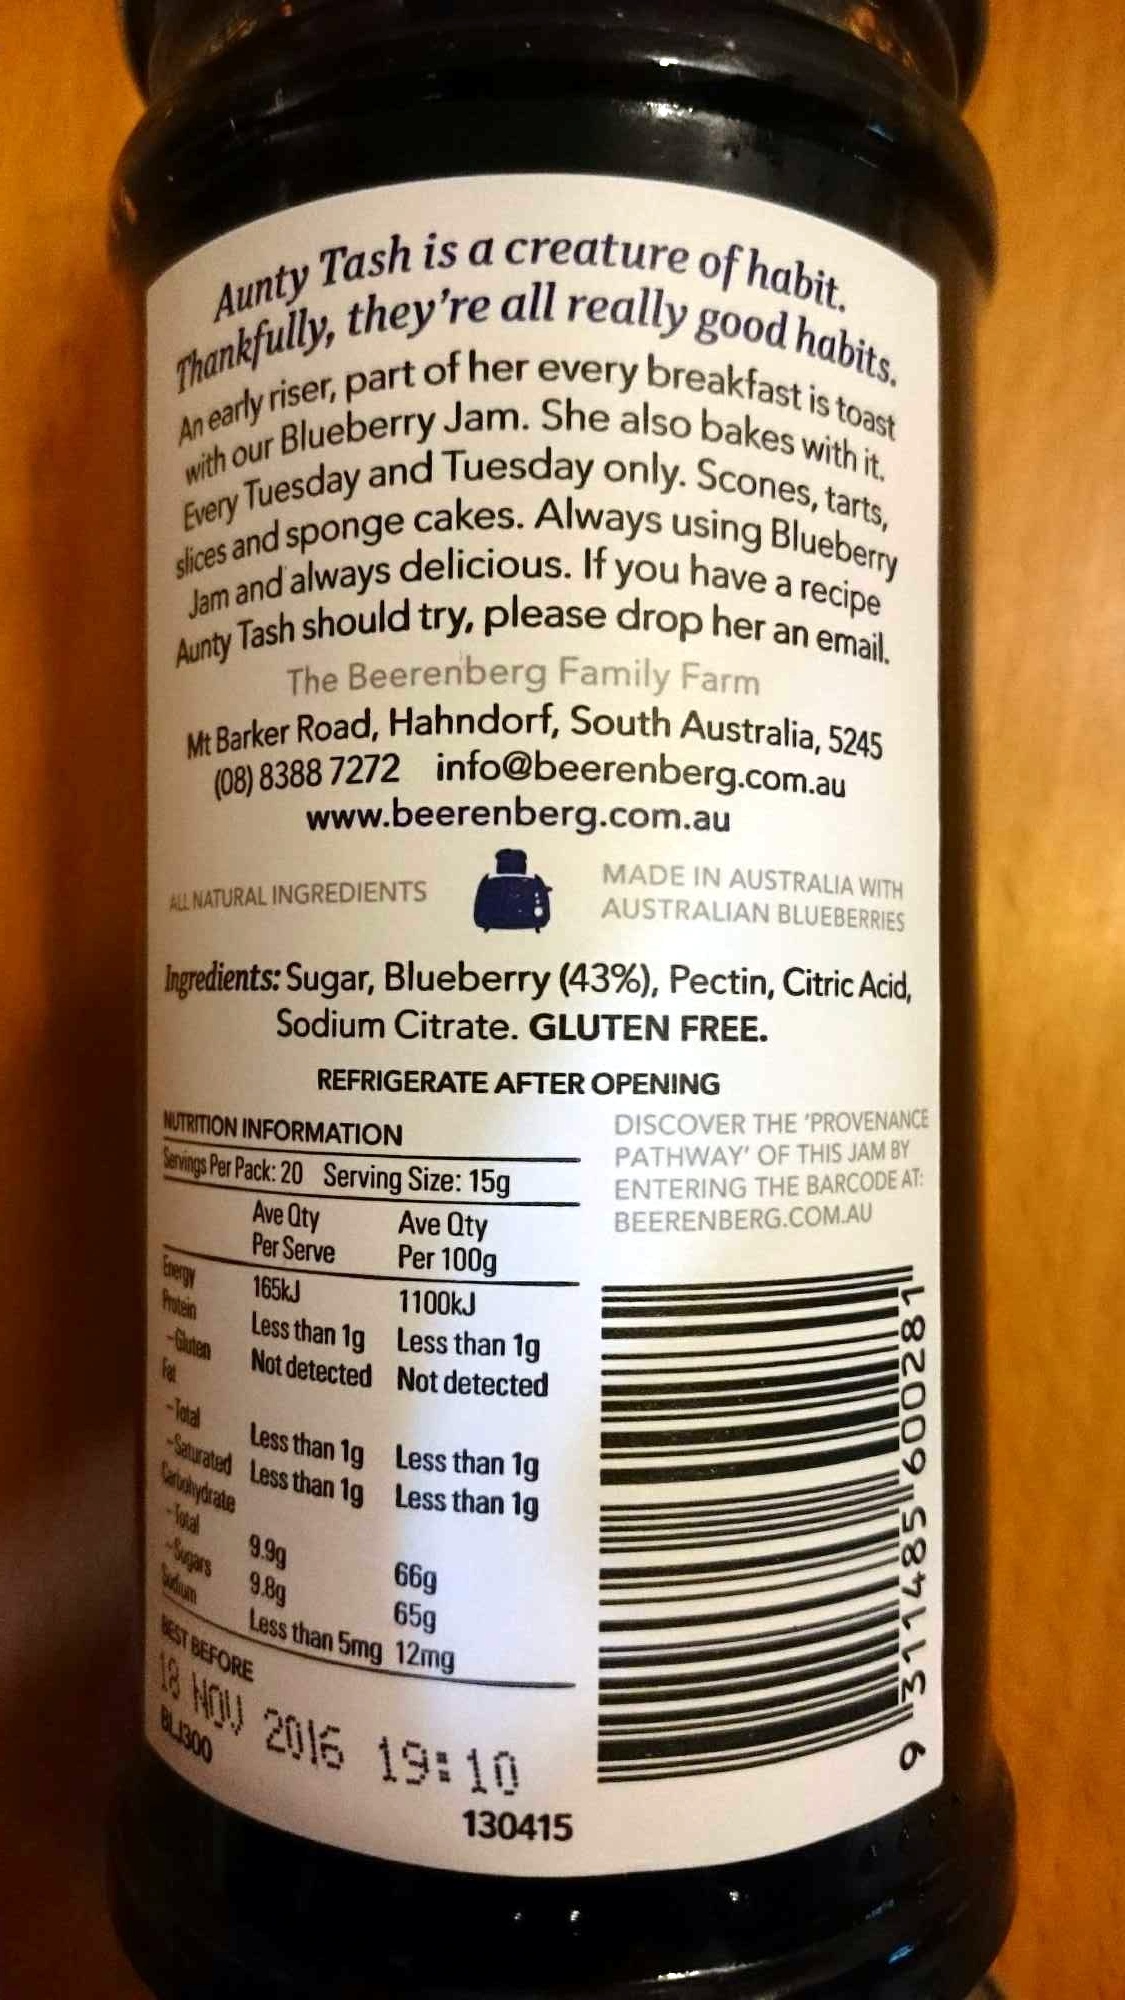 Australian blueberry jzm - Ingredients